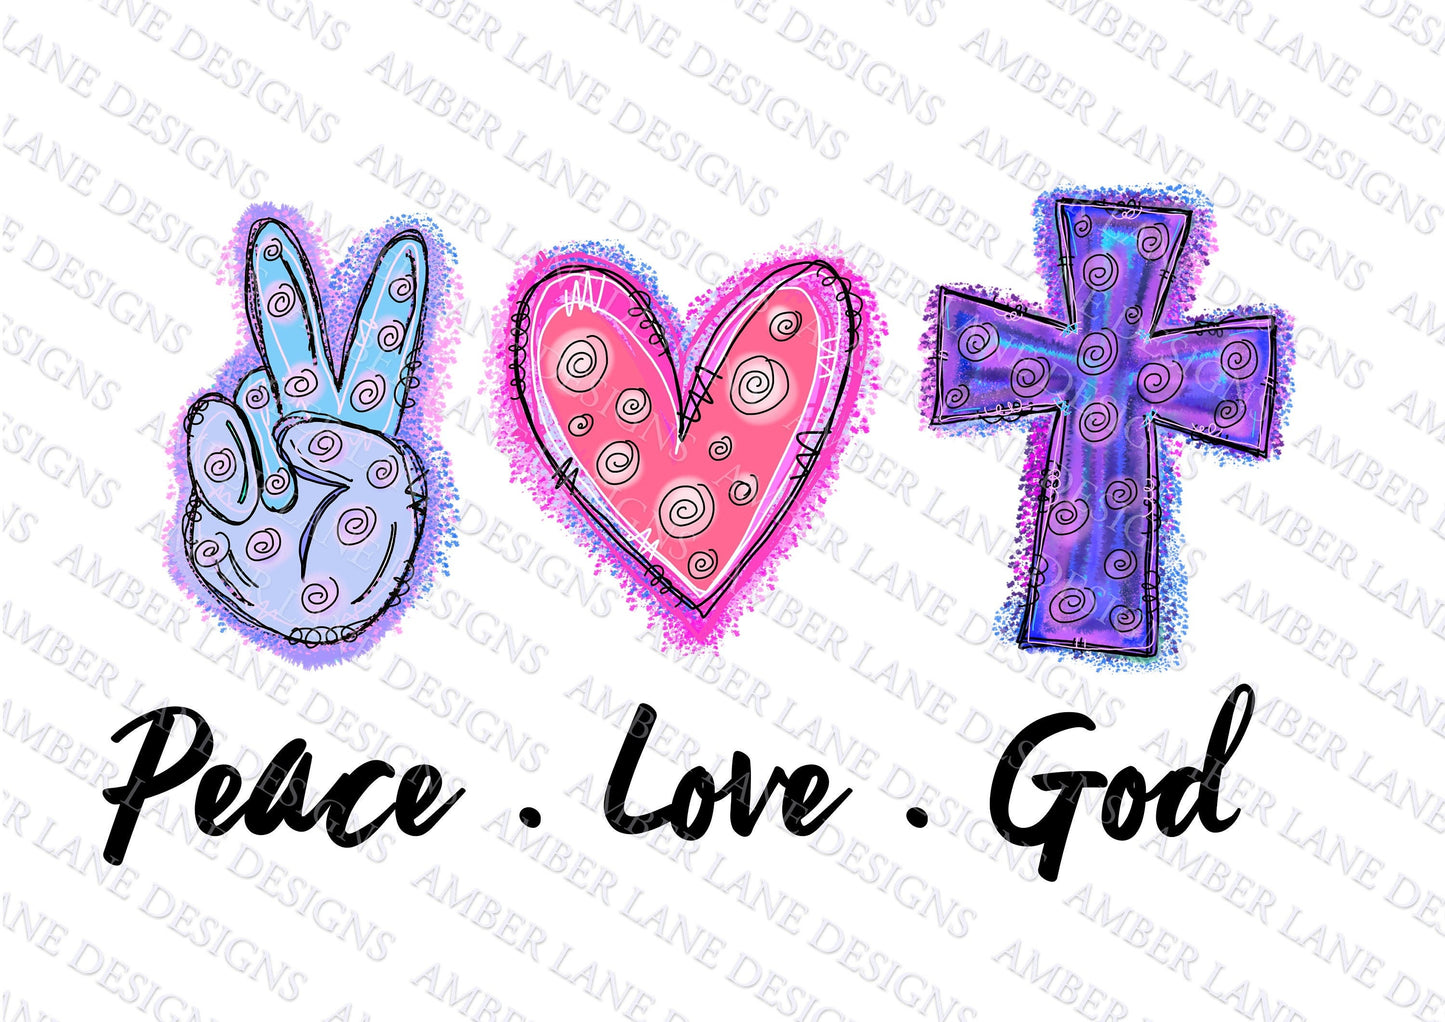 Peace Love God png file,